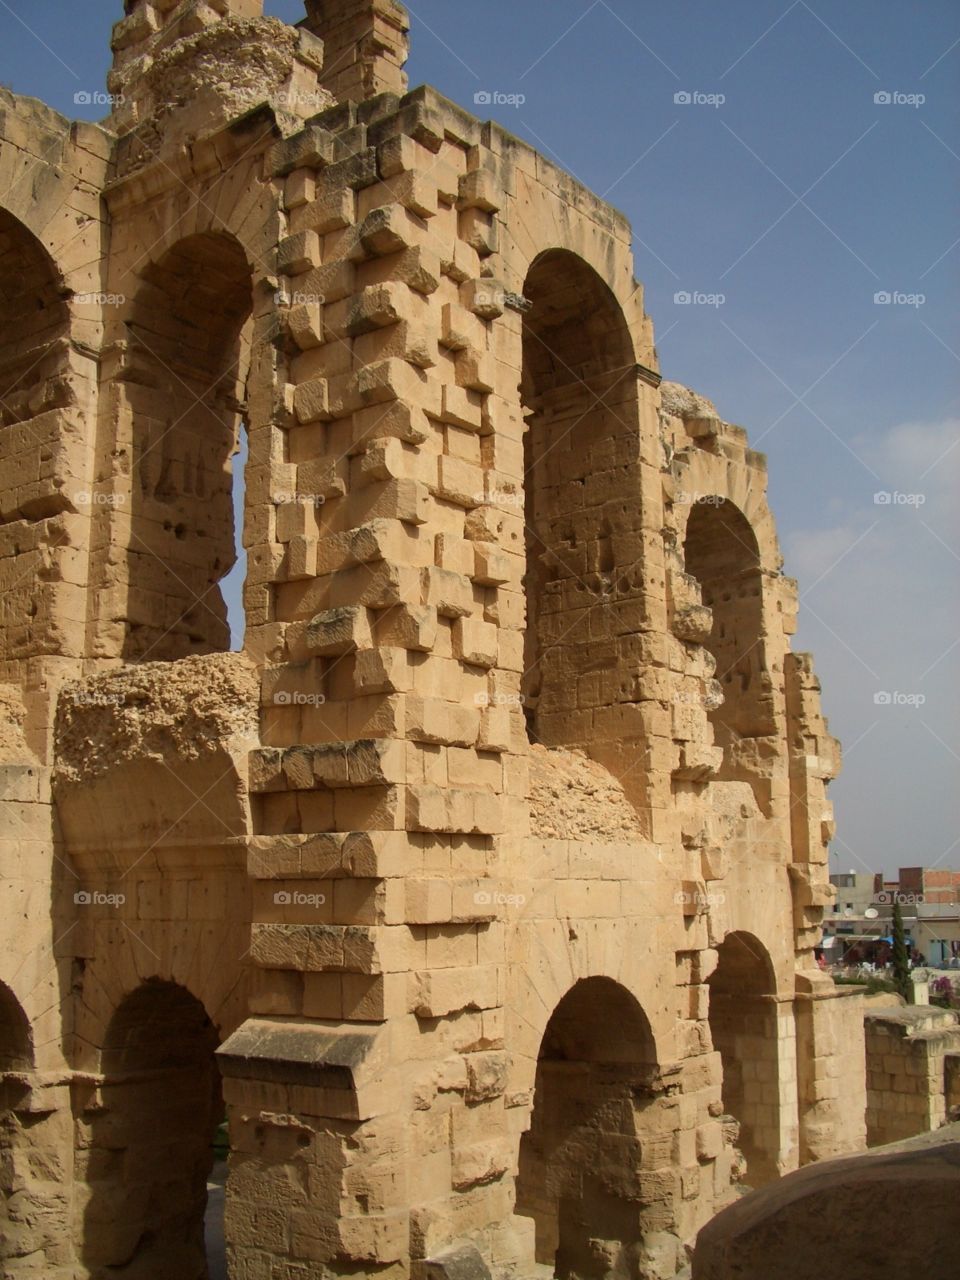 Tunisia ruins 